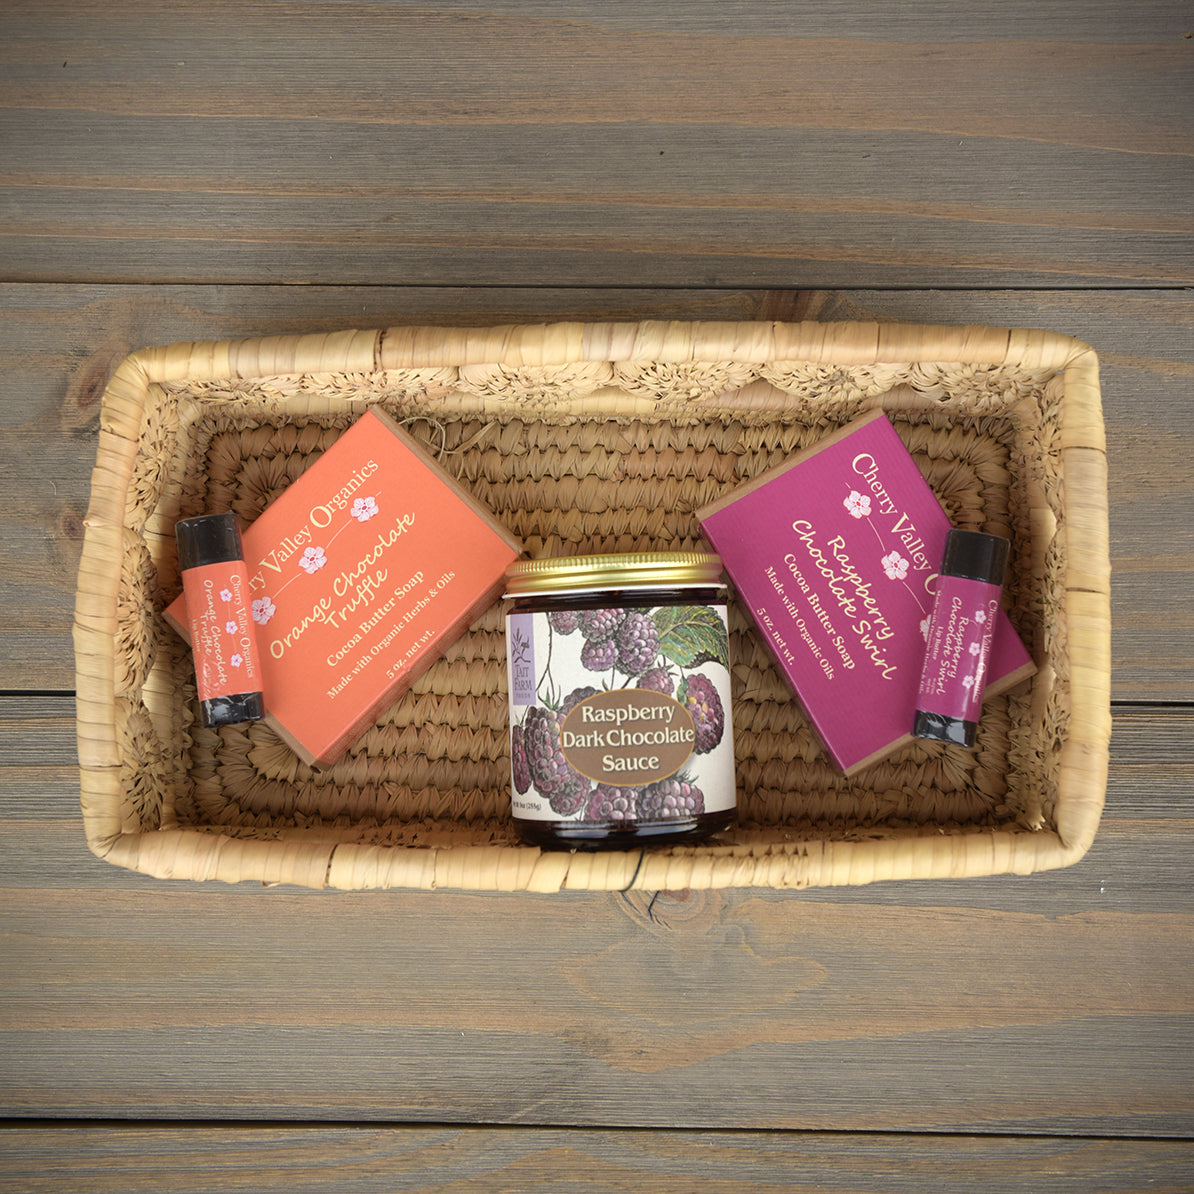 Chocolate Lover Gift Basket - Cherry Valley Organics